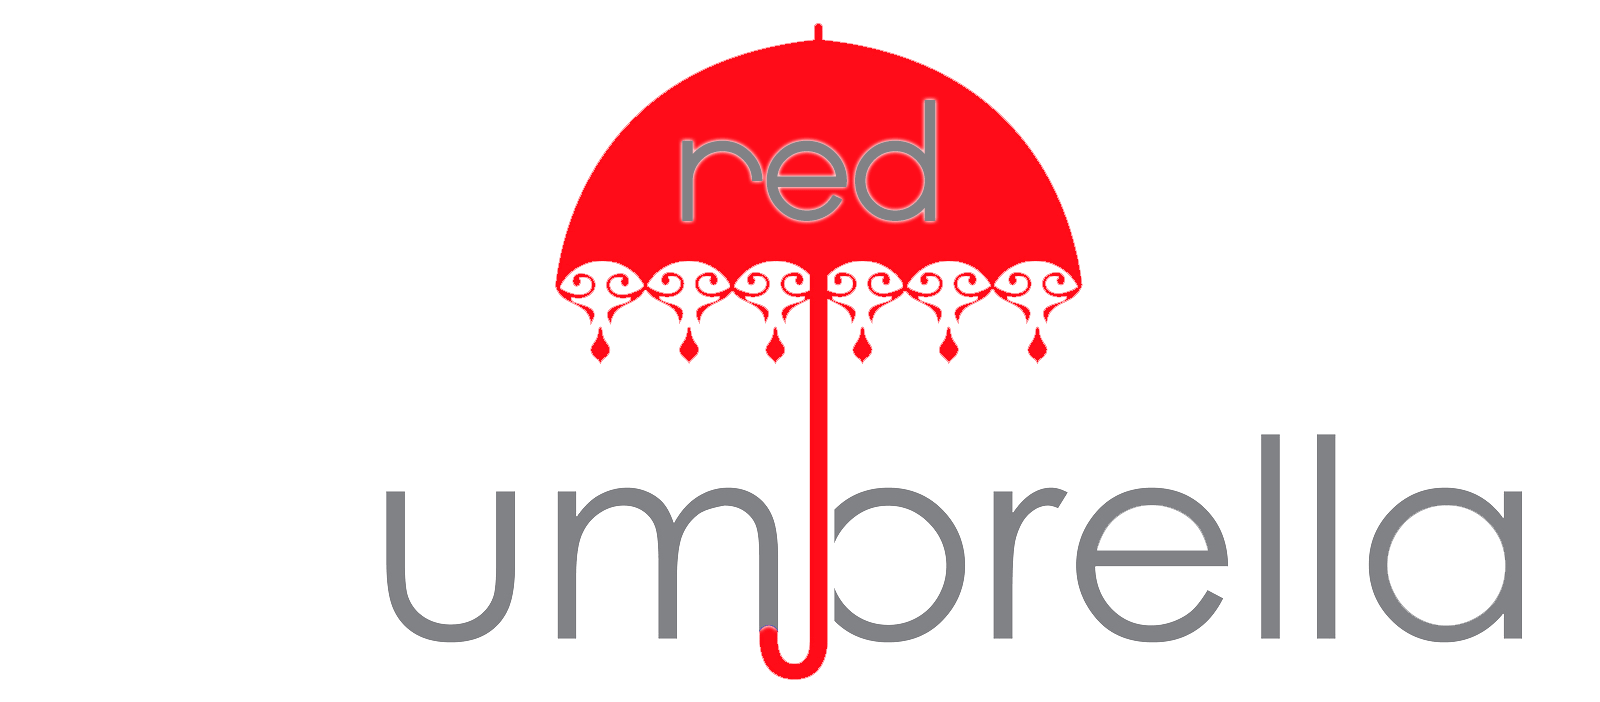 Red Umbrella Logo - Image - Red umbrella logo.PNG | RE Chronicles Wiki | FANDOM powered ...